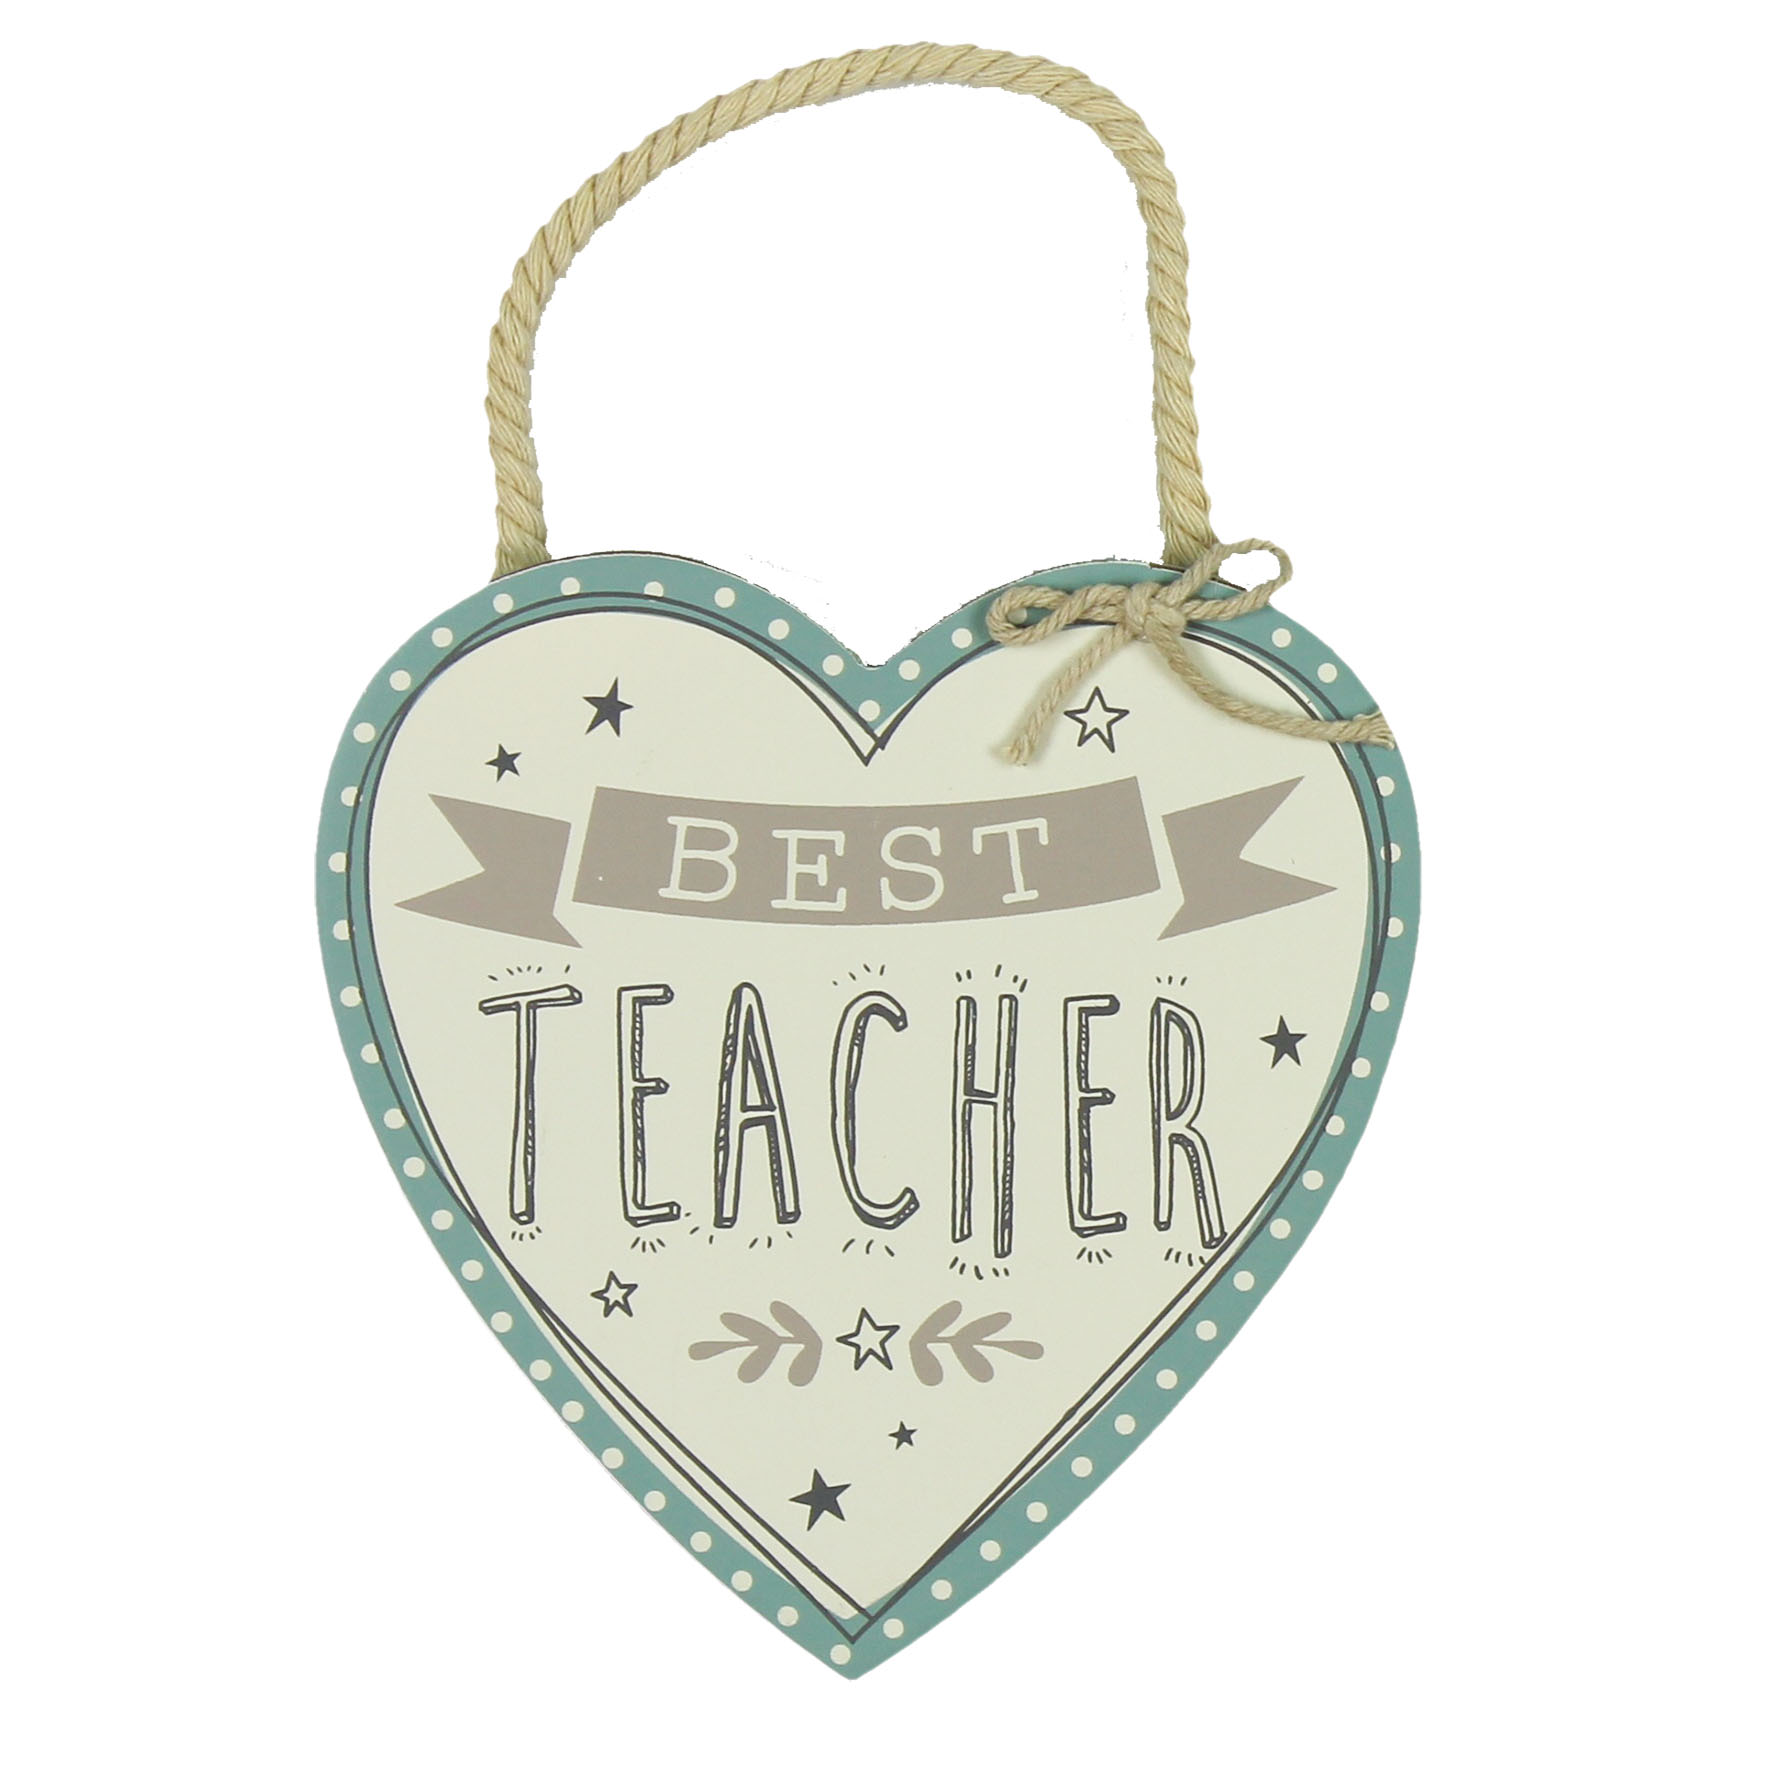 Widdop-Best-Teacher-Heart-Plaque.jpg